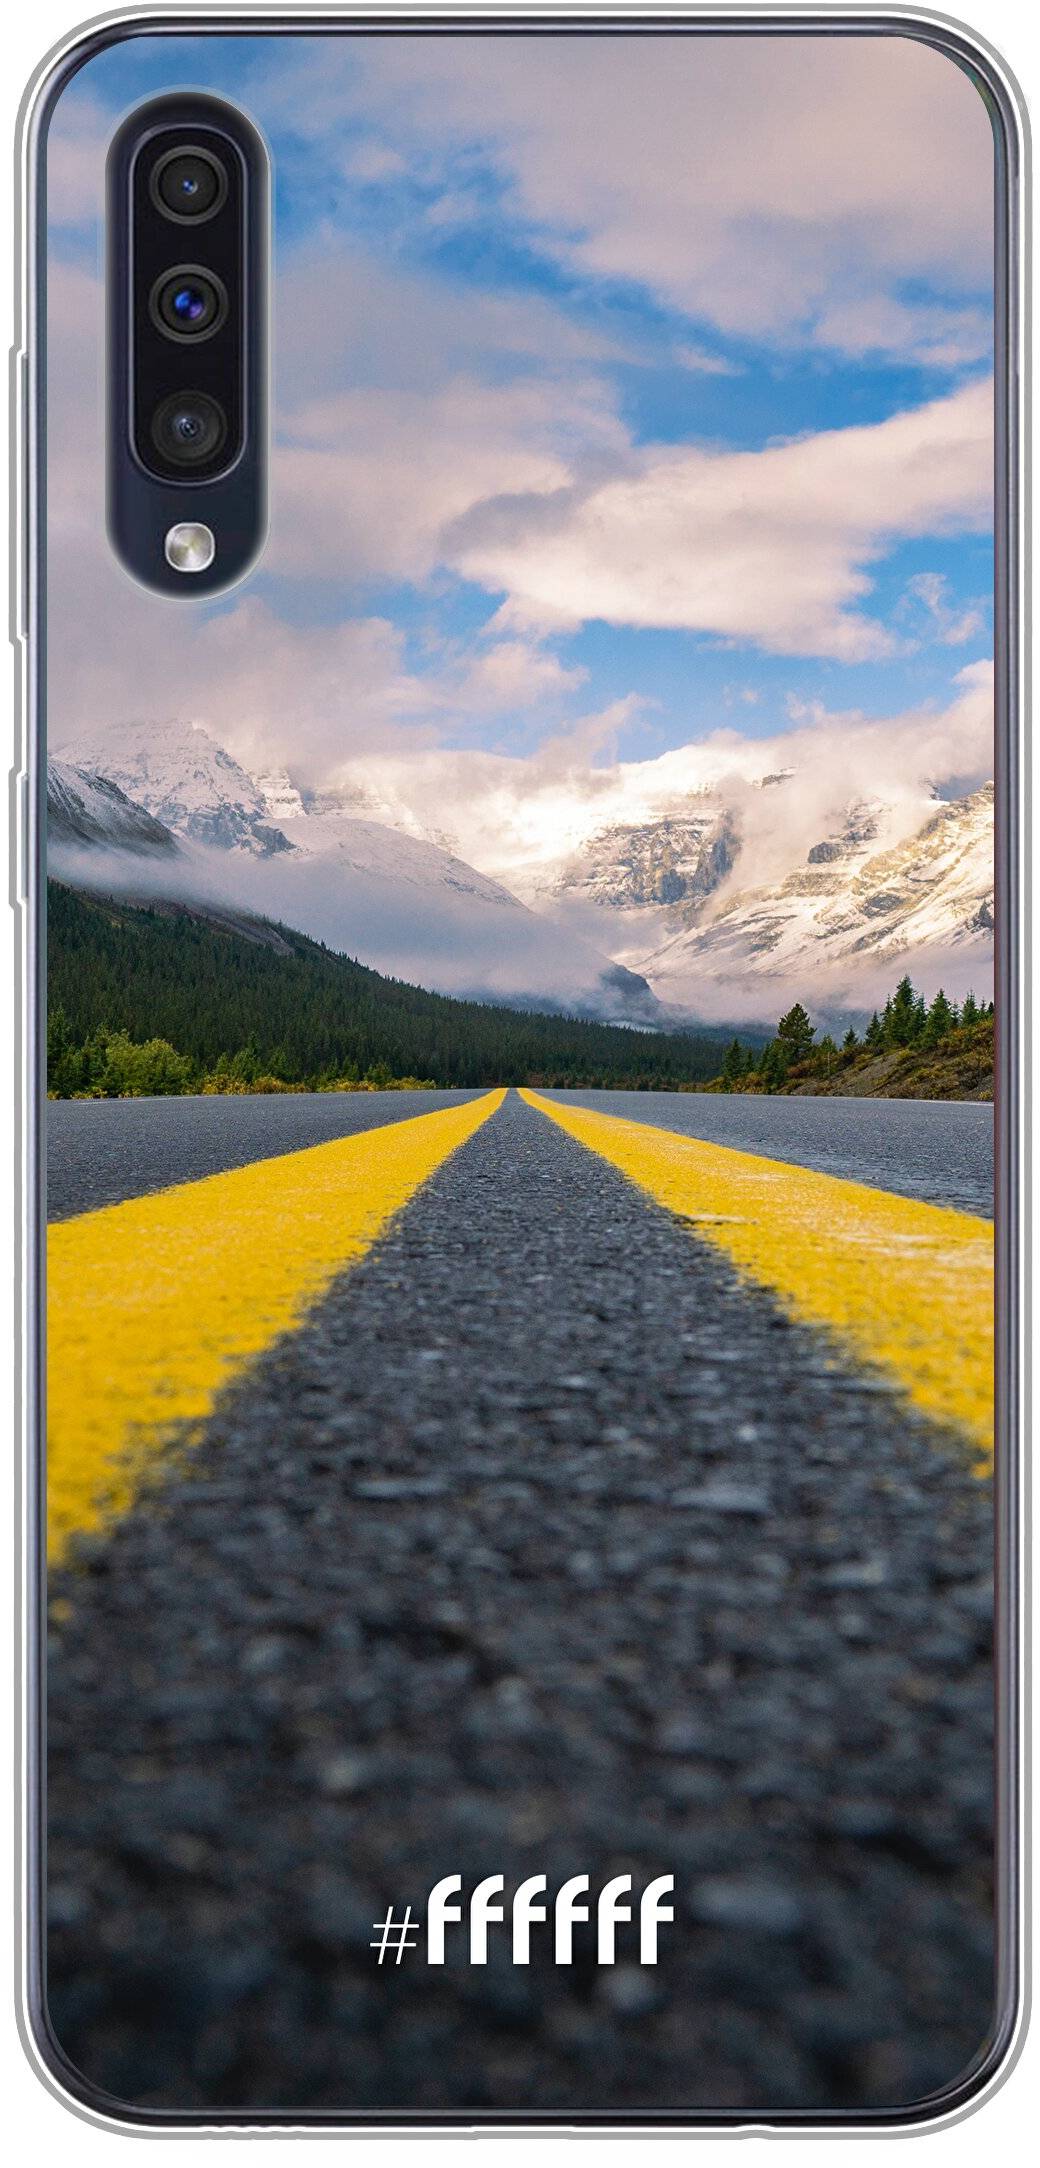 Road Ahead Galaxy A50s